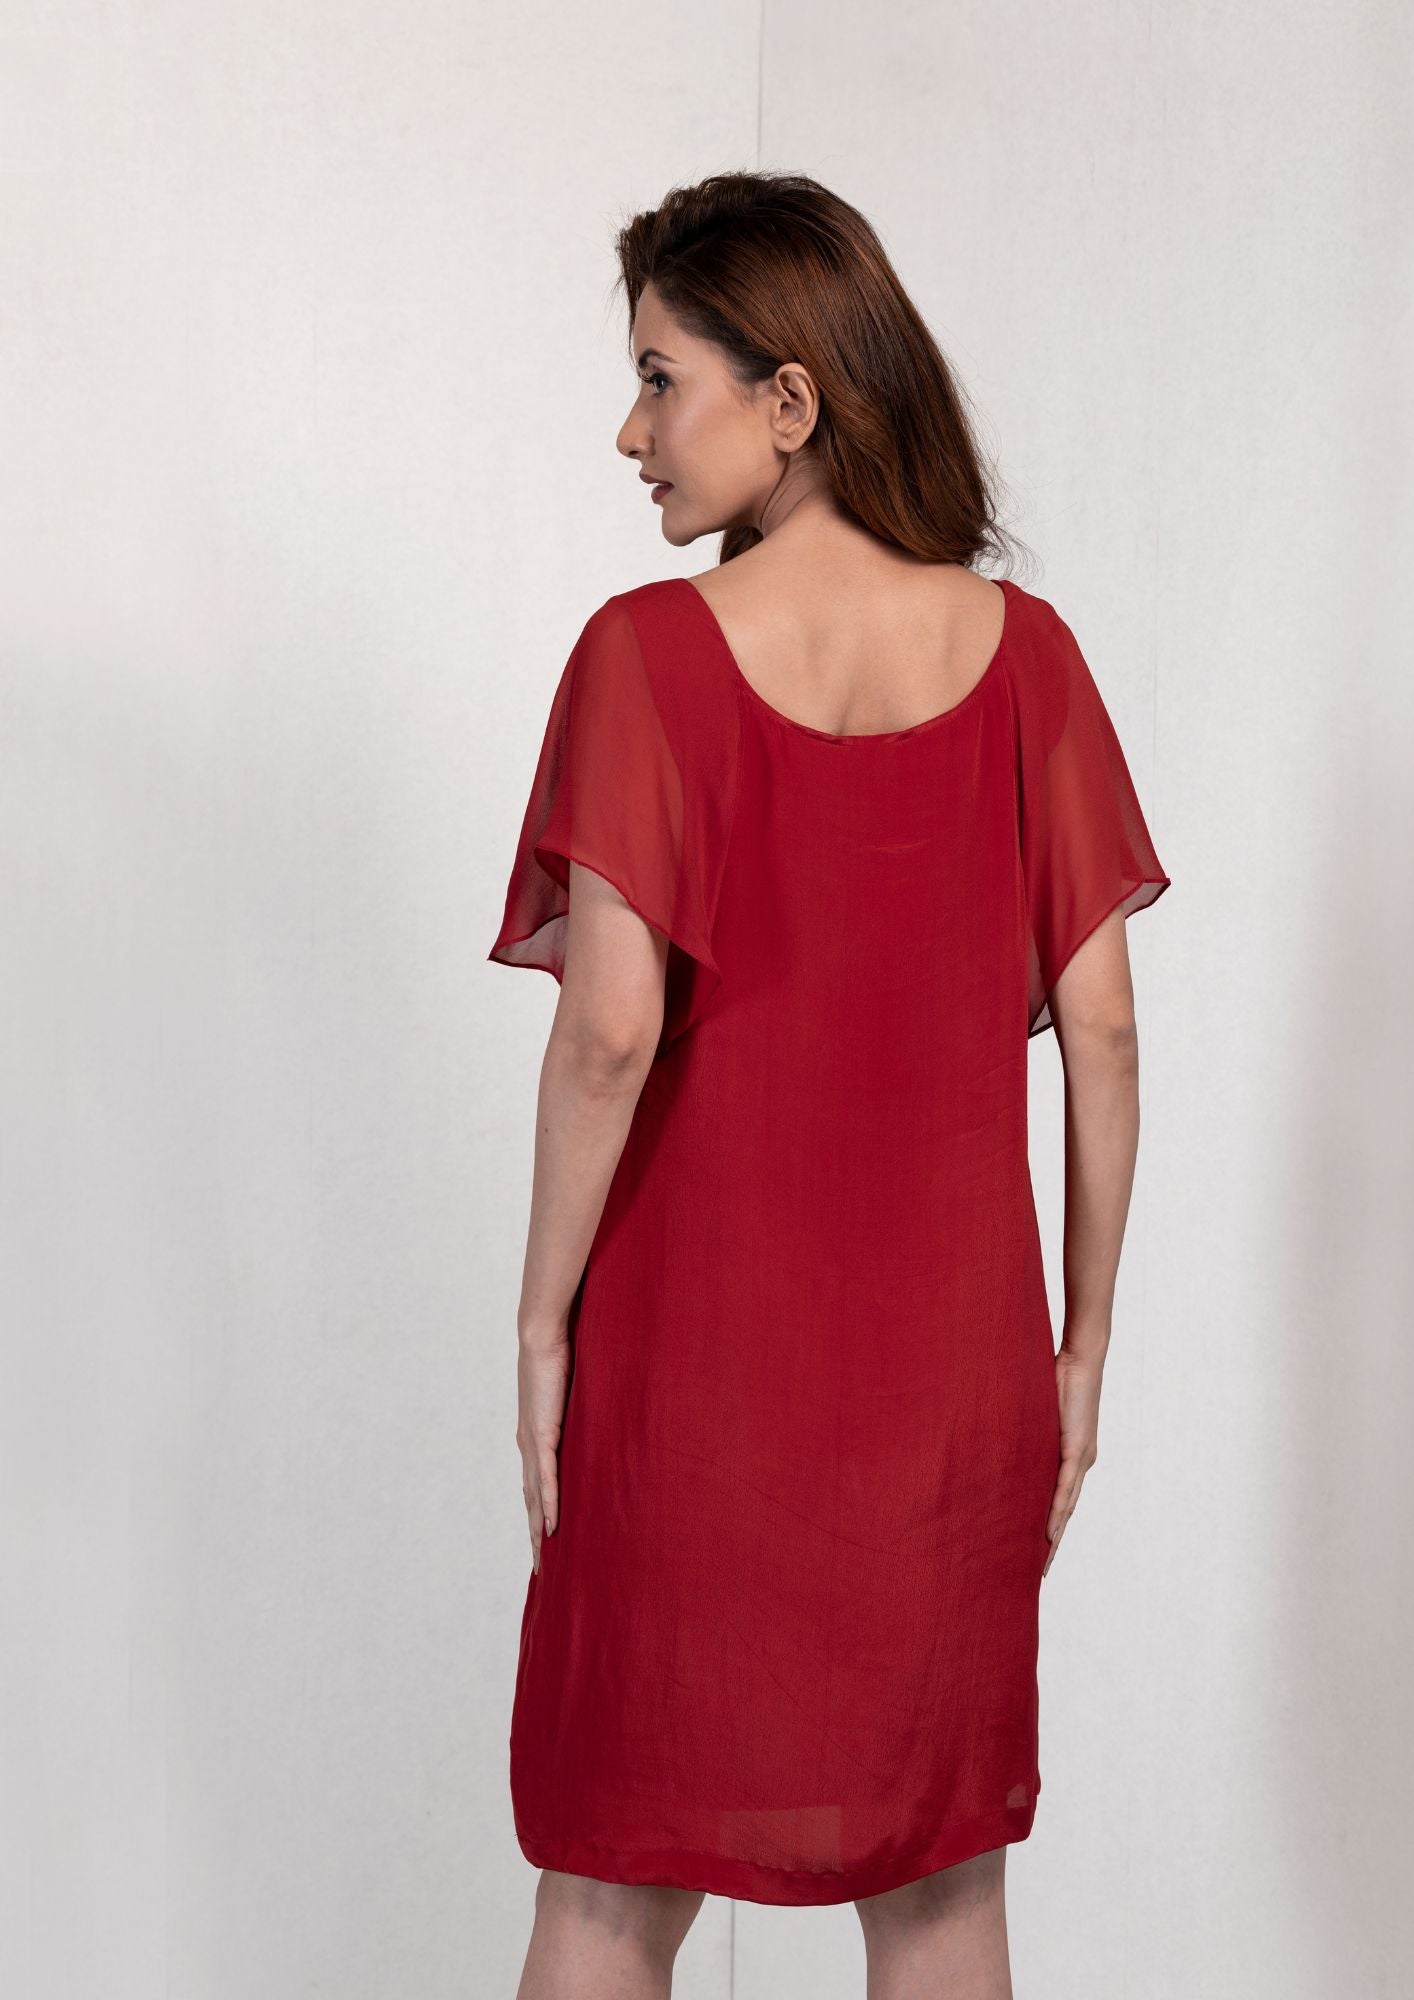 Red brunch dress